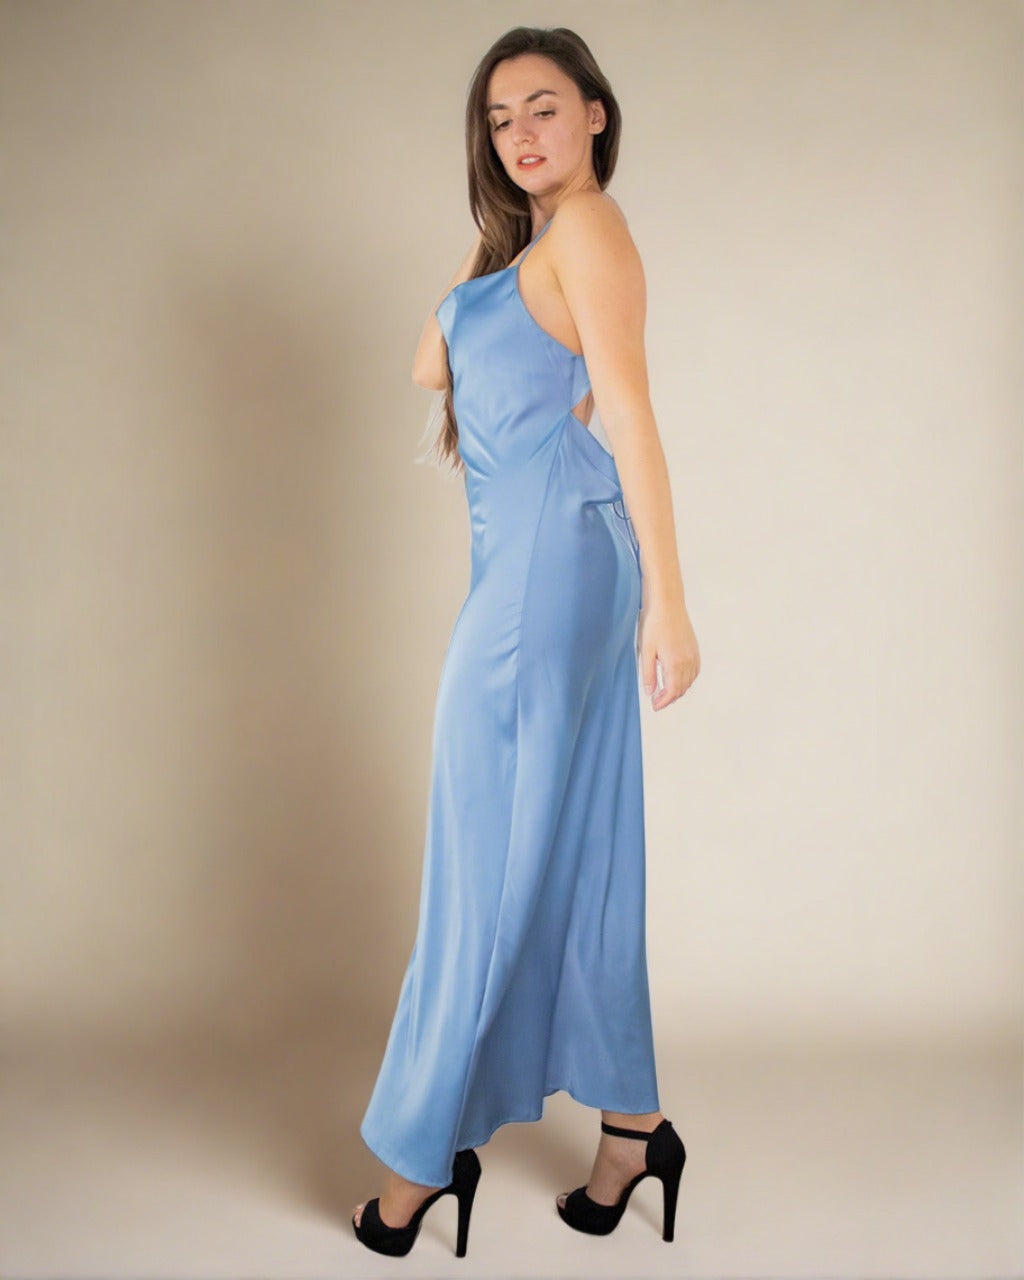 Blue Satin Cowl Neck Dress - Long Satin Slip Dress